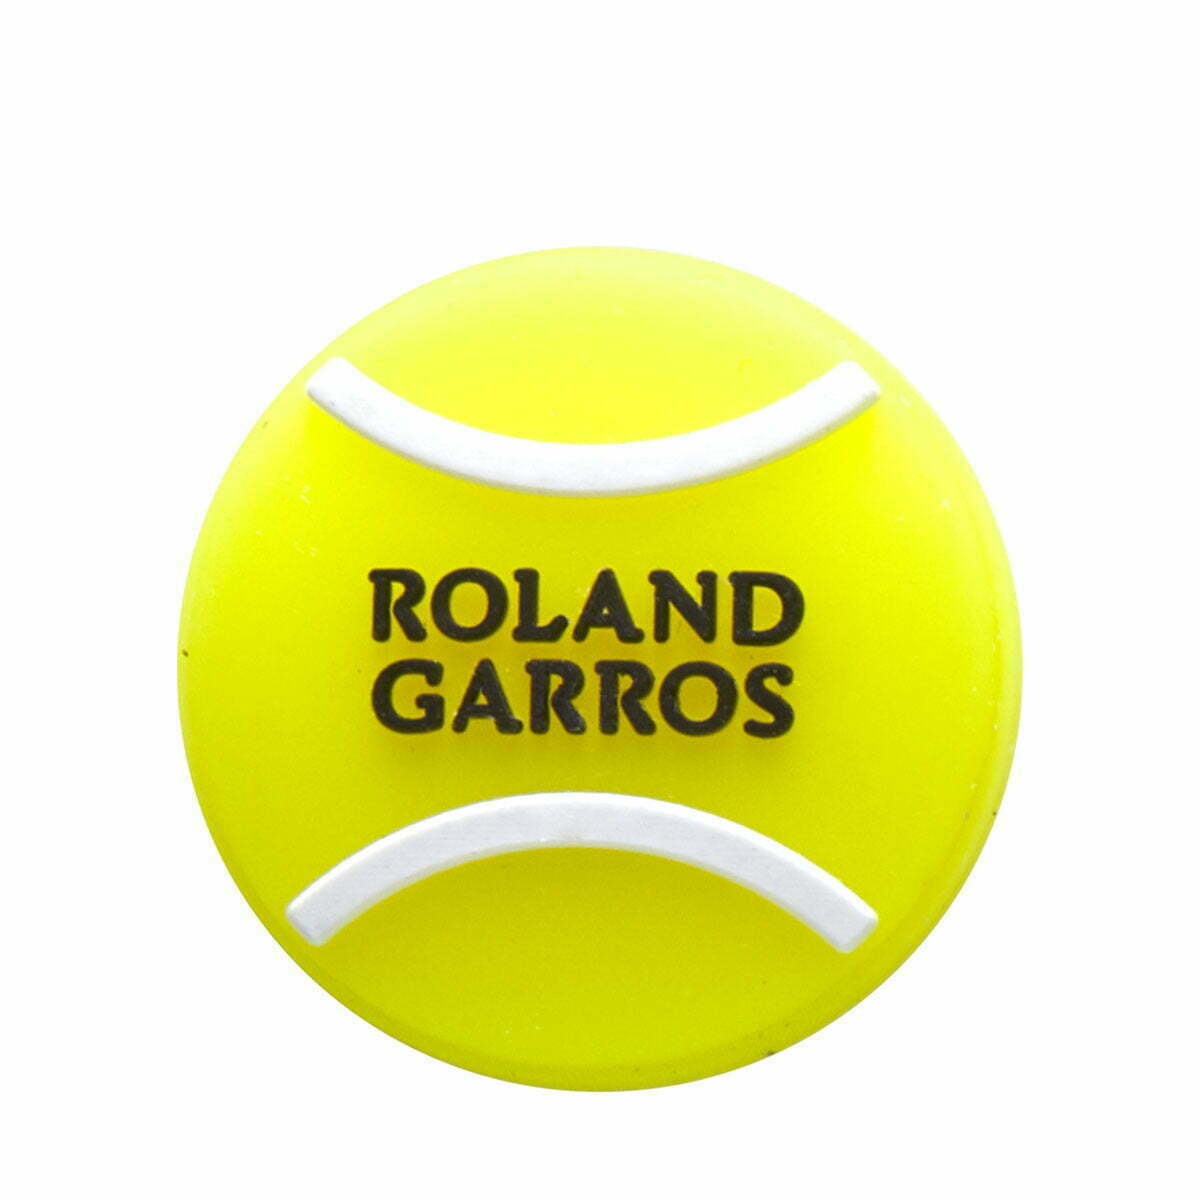 Wr8403801 1 Rg Tennis Ball Dampener Ye.png.cq5dam.web .2000.2000.jpg